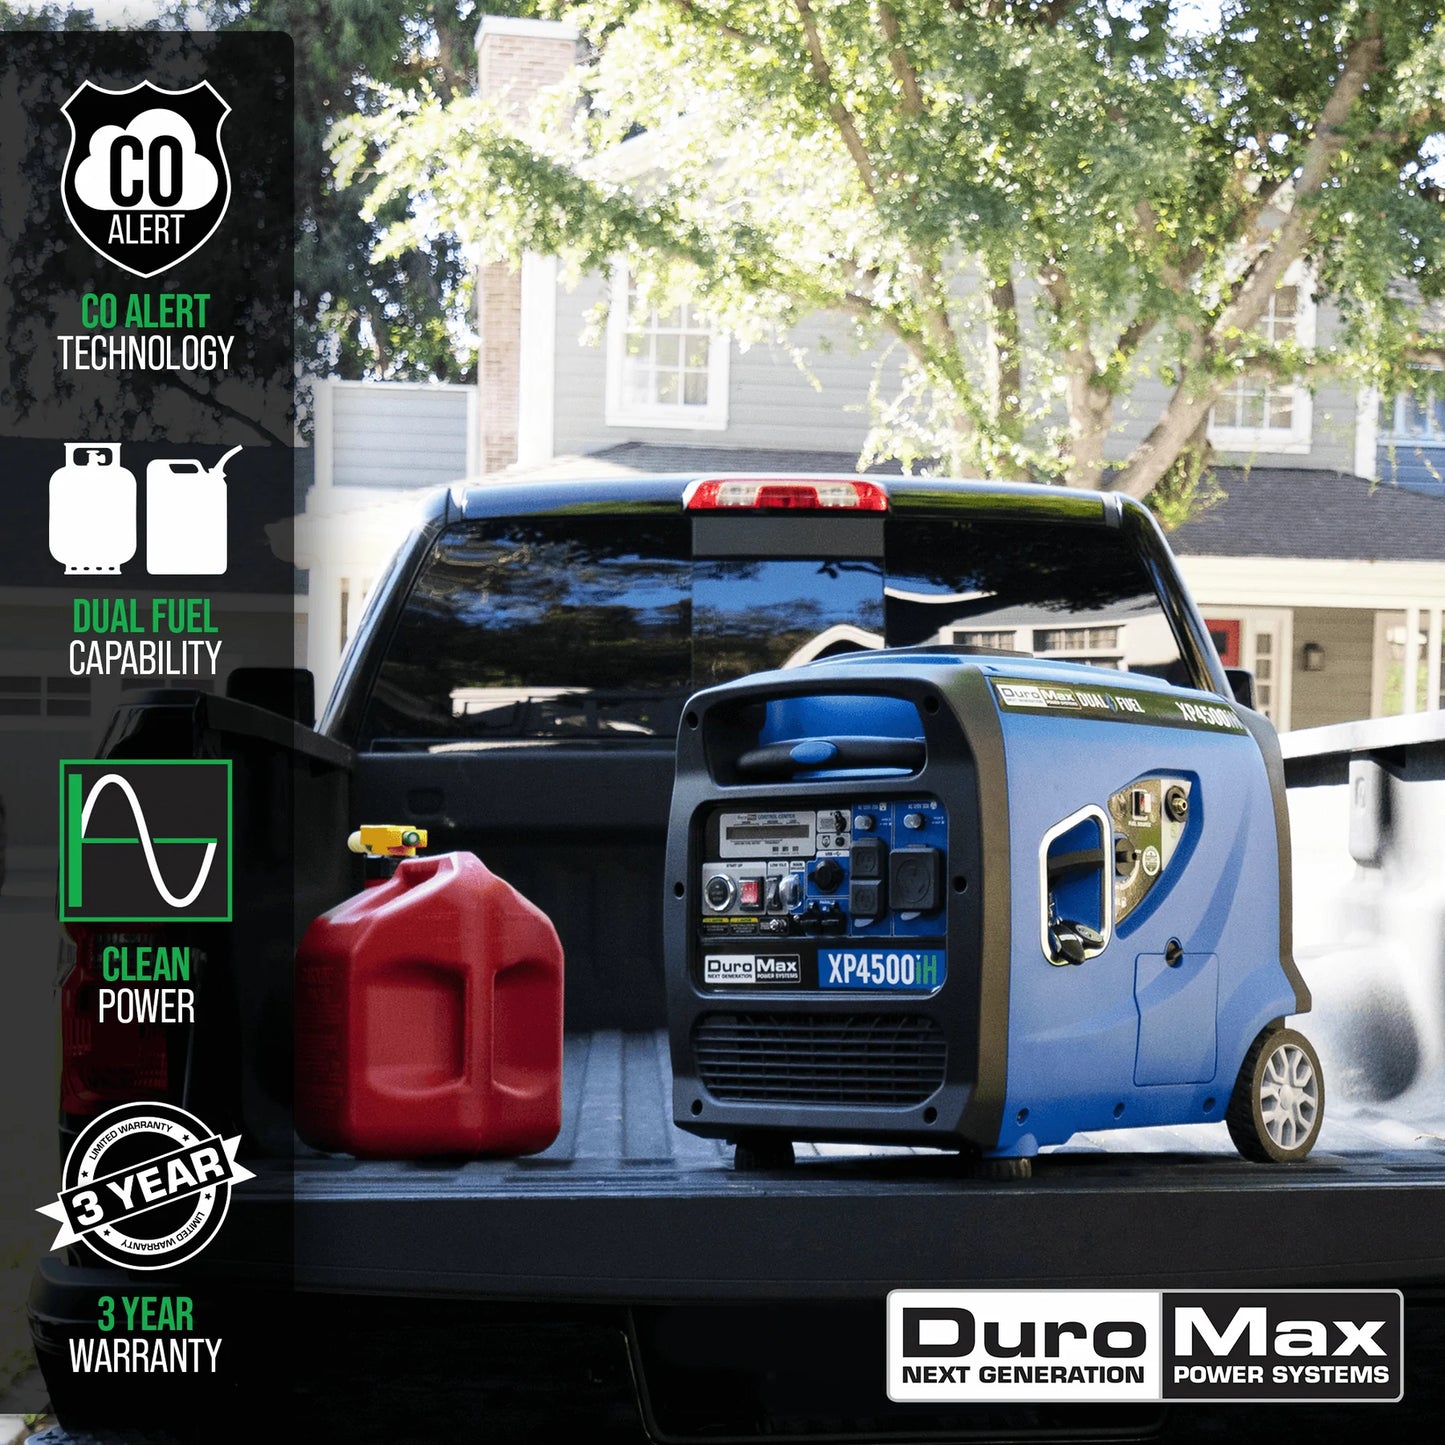 DuroMax XP4500iH 4,500 Watt Dual Fuel Portable Inverter Generator w/ CO Alert